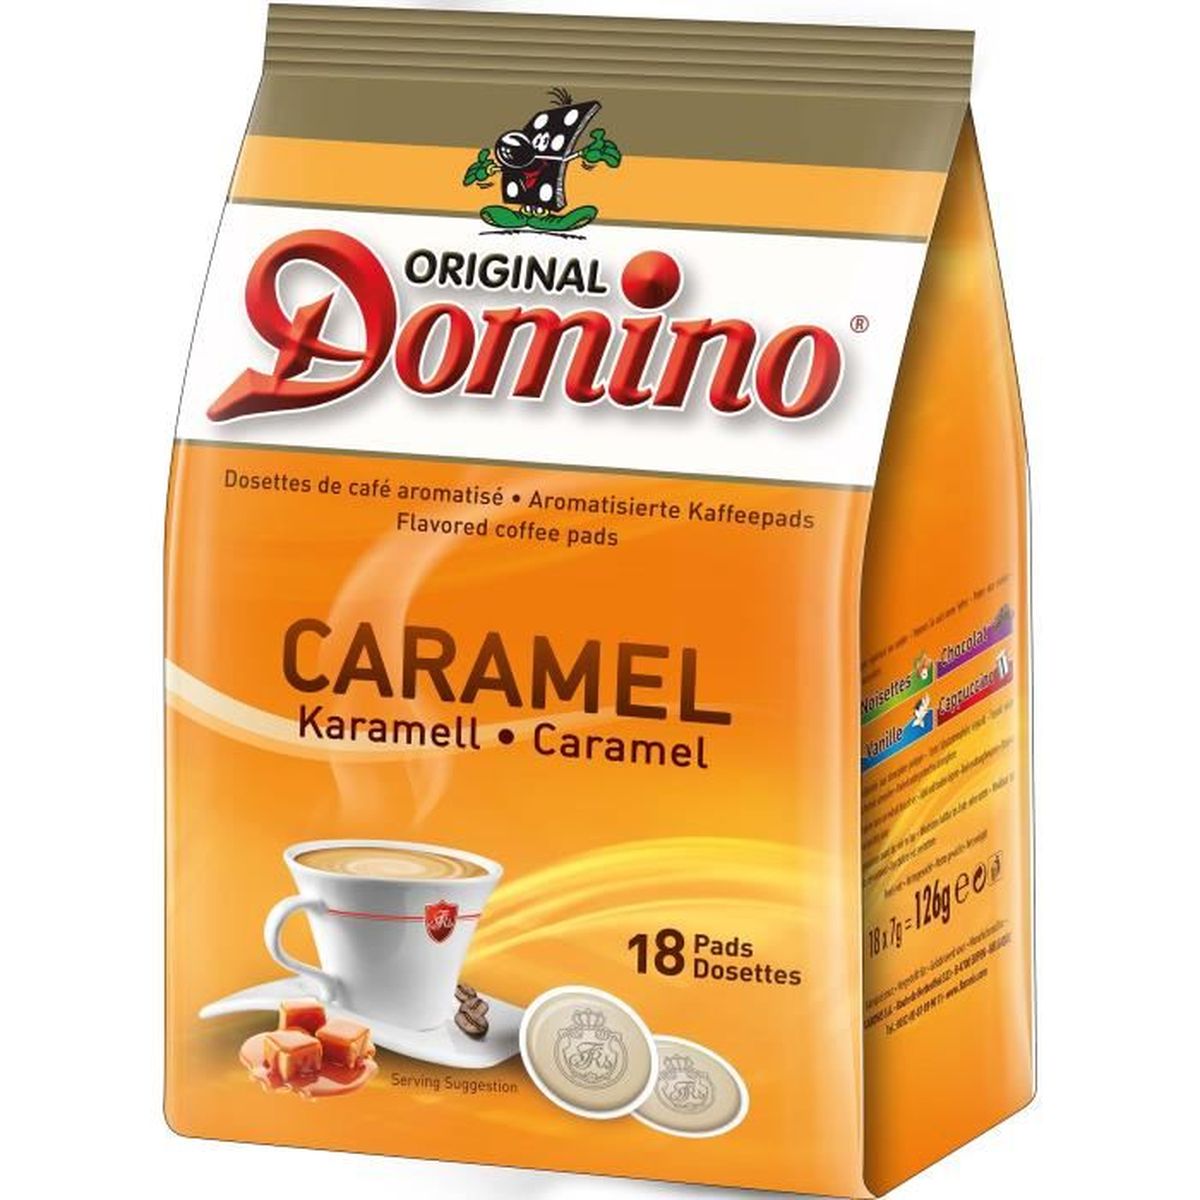 Dosettes souples saveur caramel - milka - 7